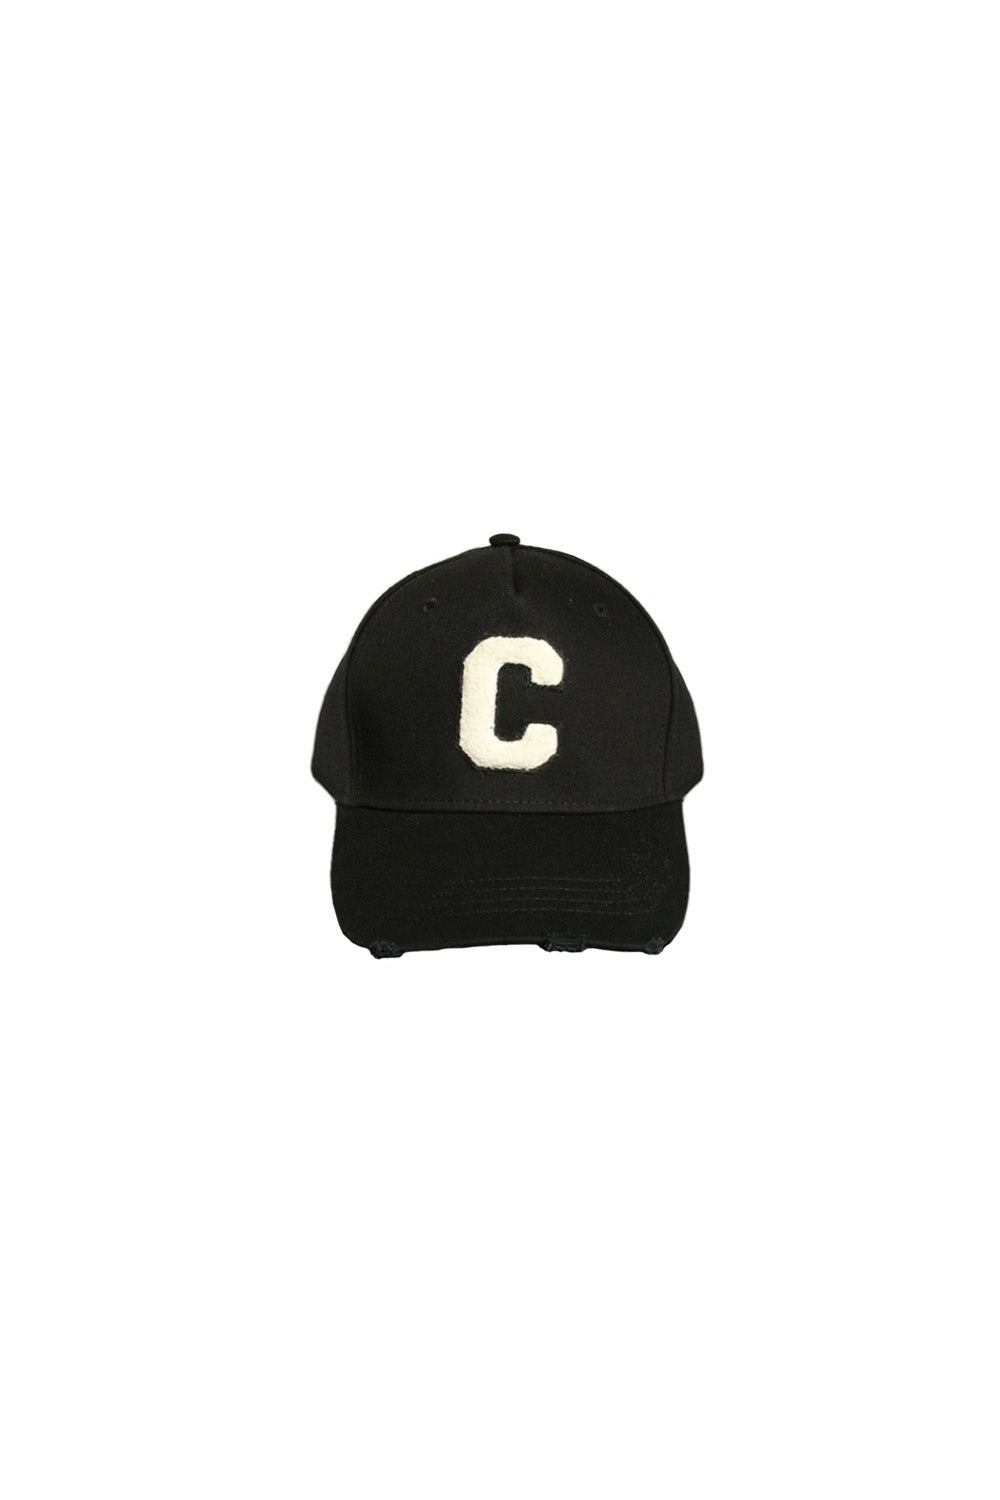 "C" Logo Baseball Cap